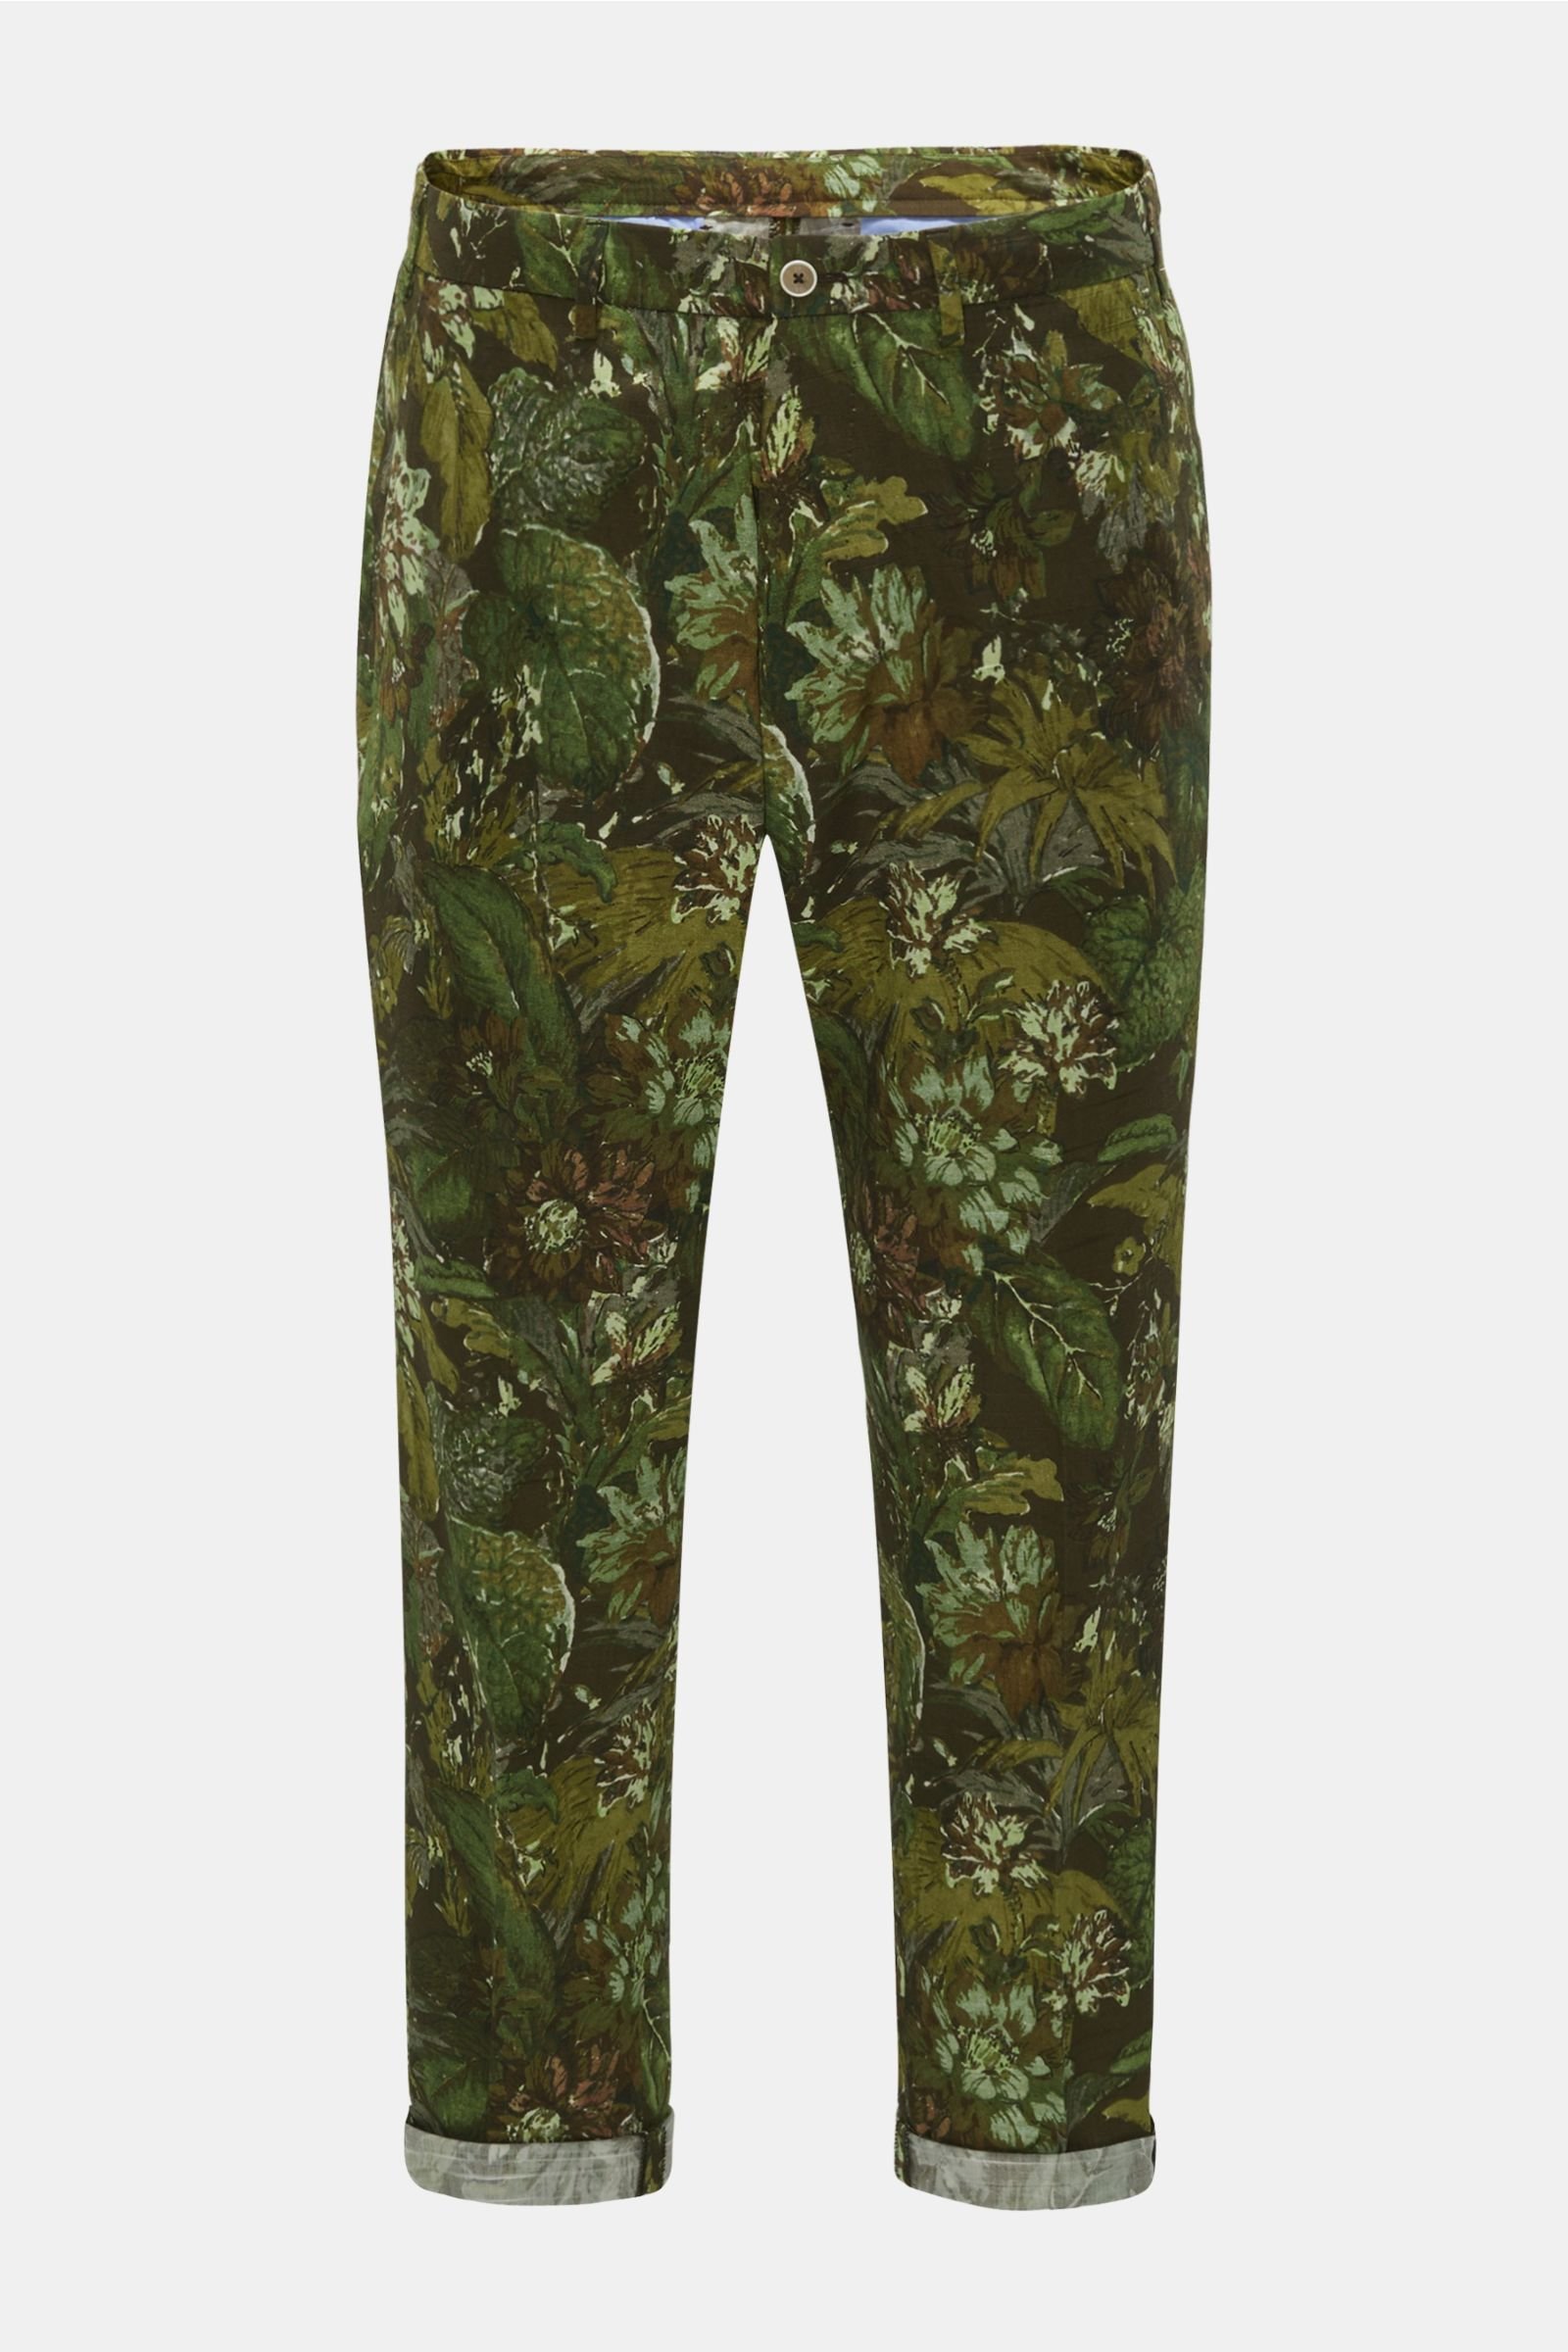 Cotton jogger pants 'Larry' green/olive patterned